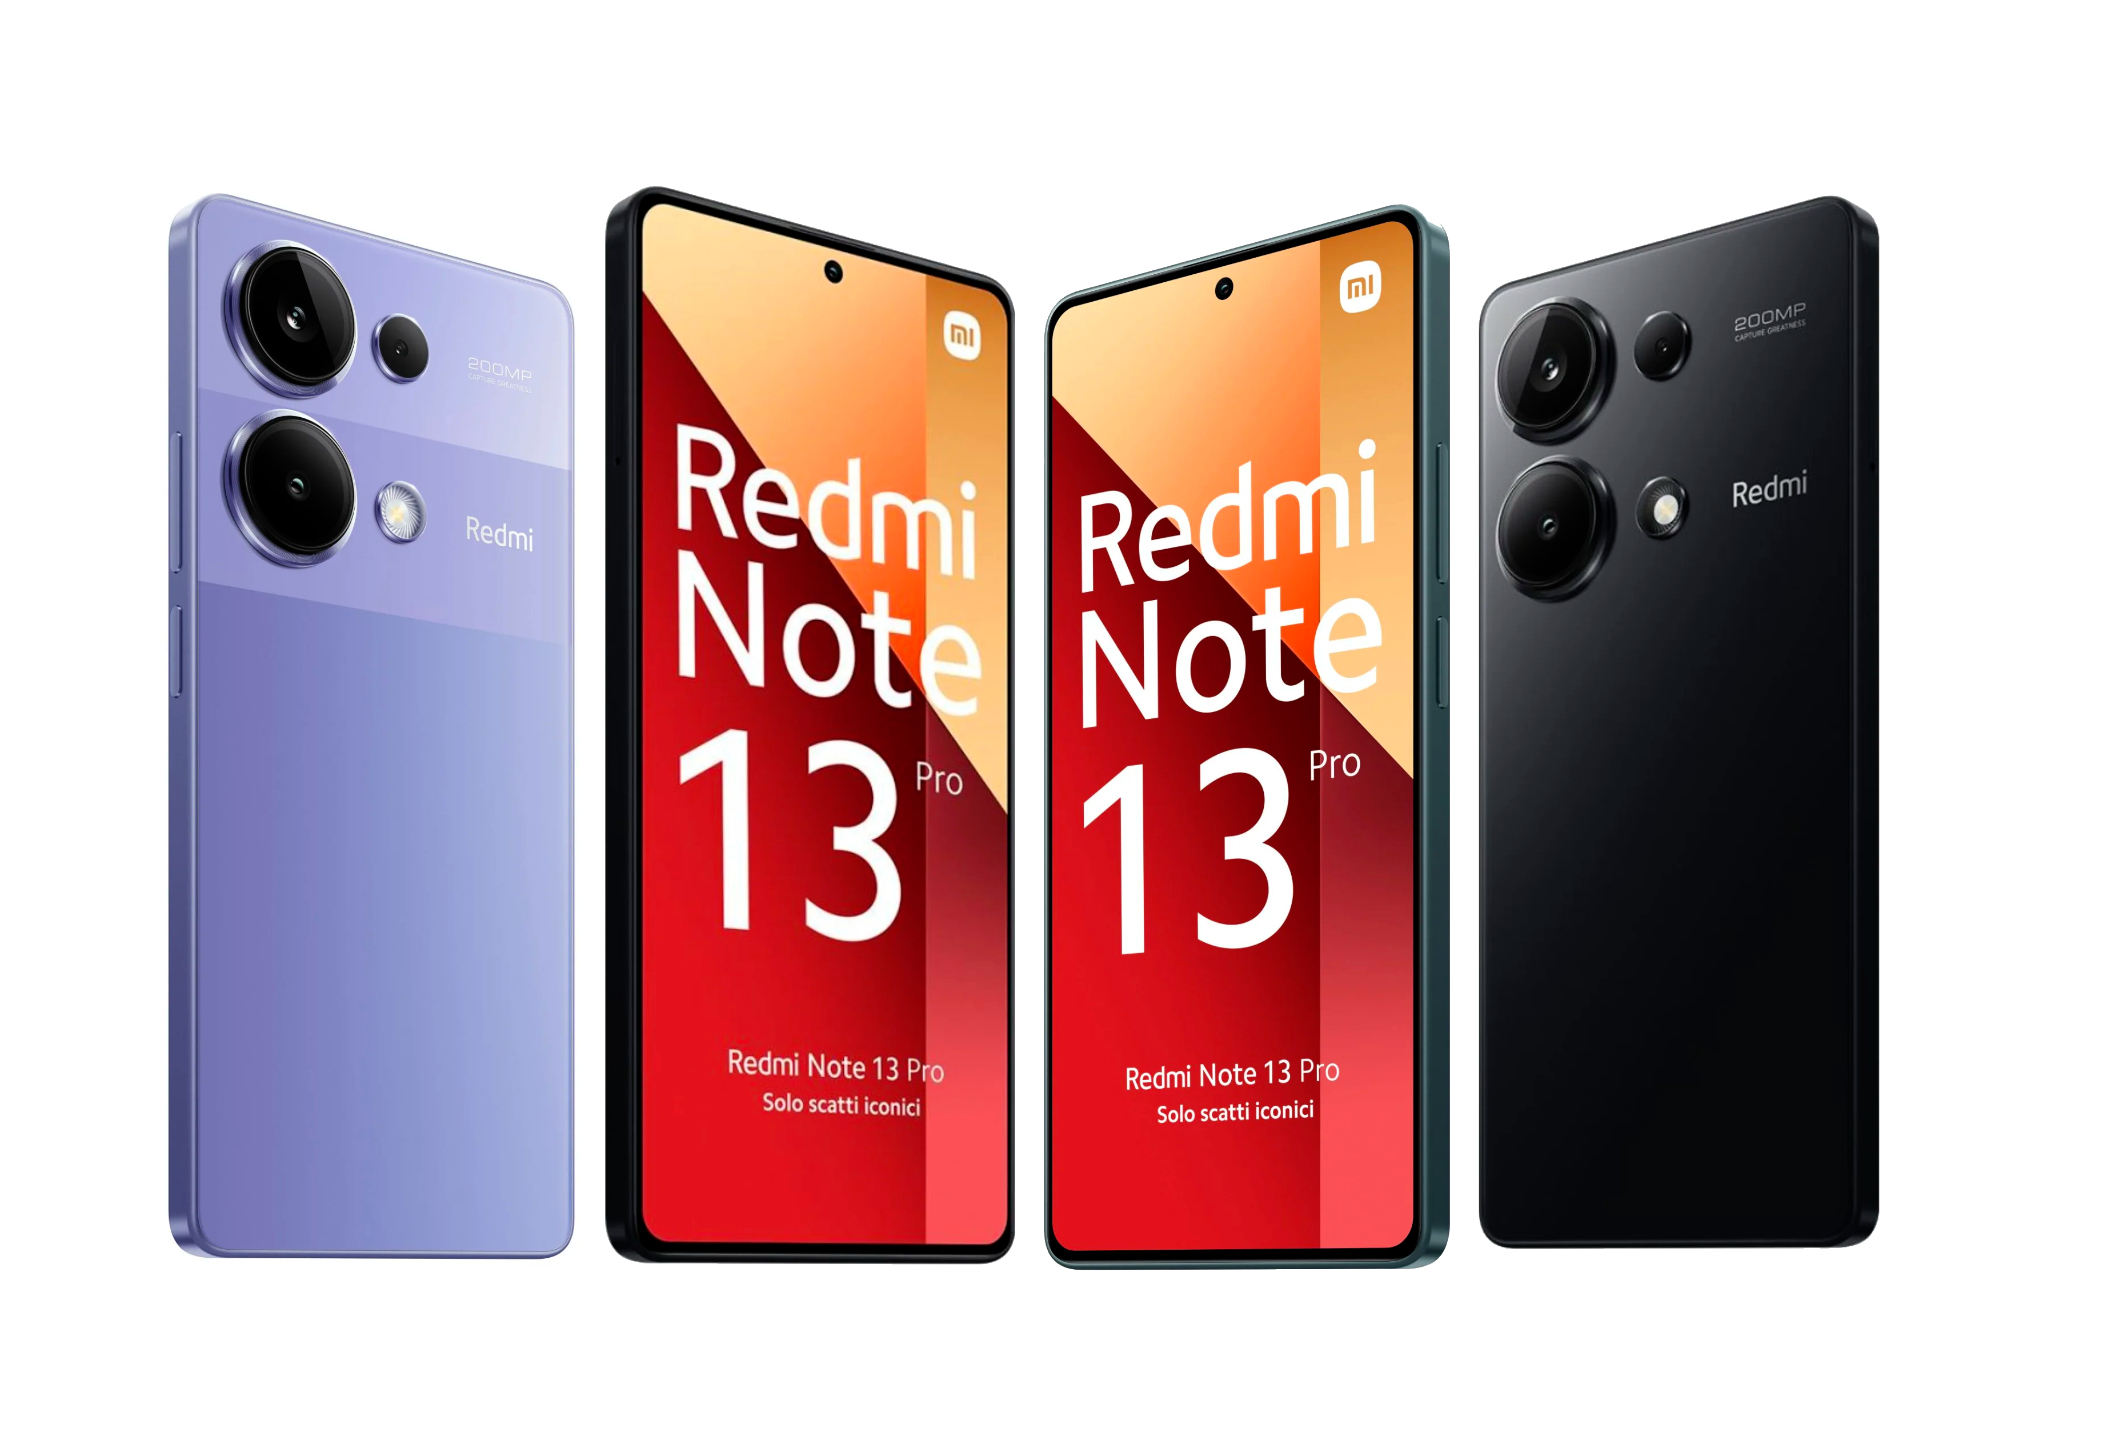 Se rumorea que Xiaomi Redmi Note 13 Pro y Redmi Note 13 Pro Plus